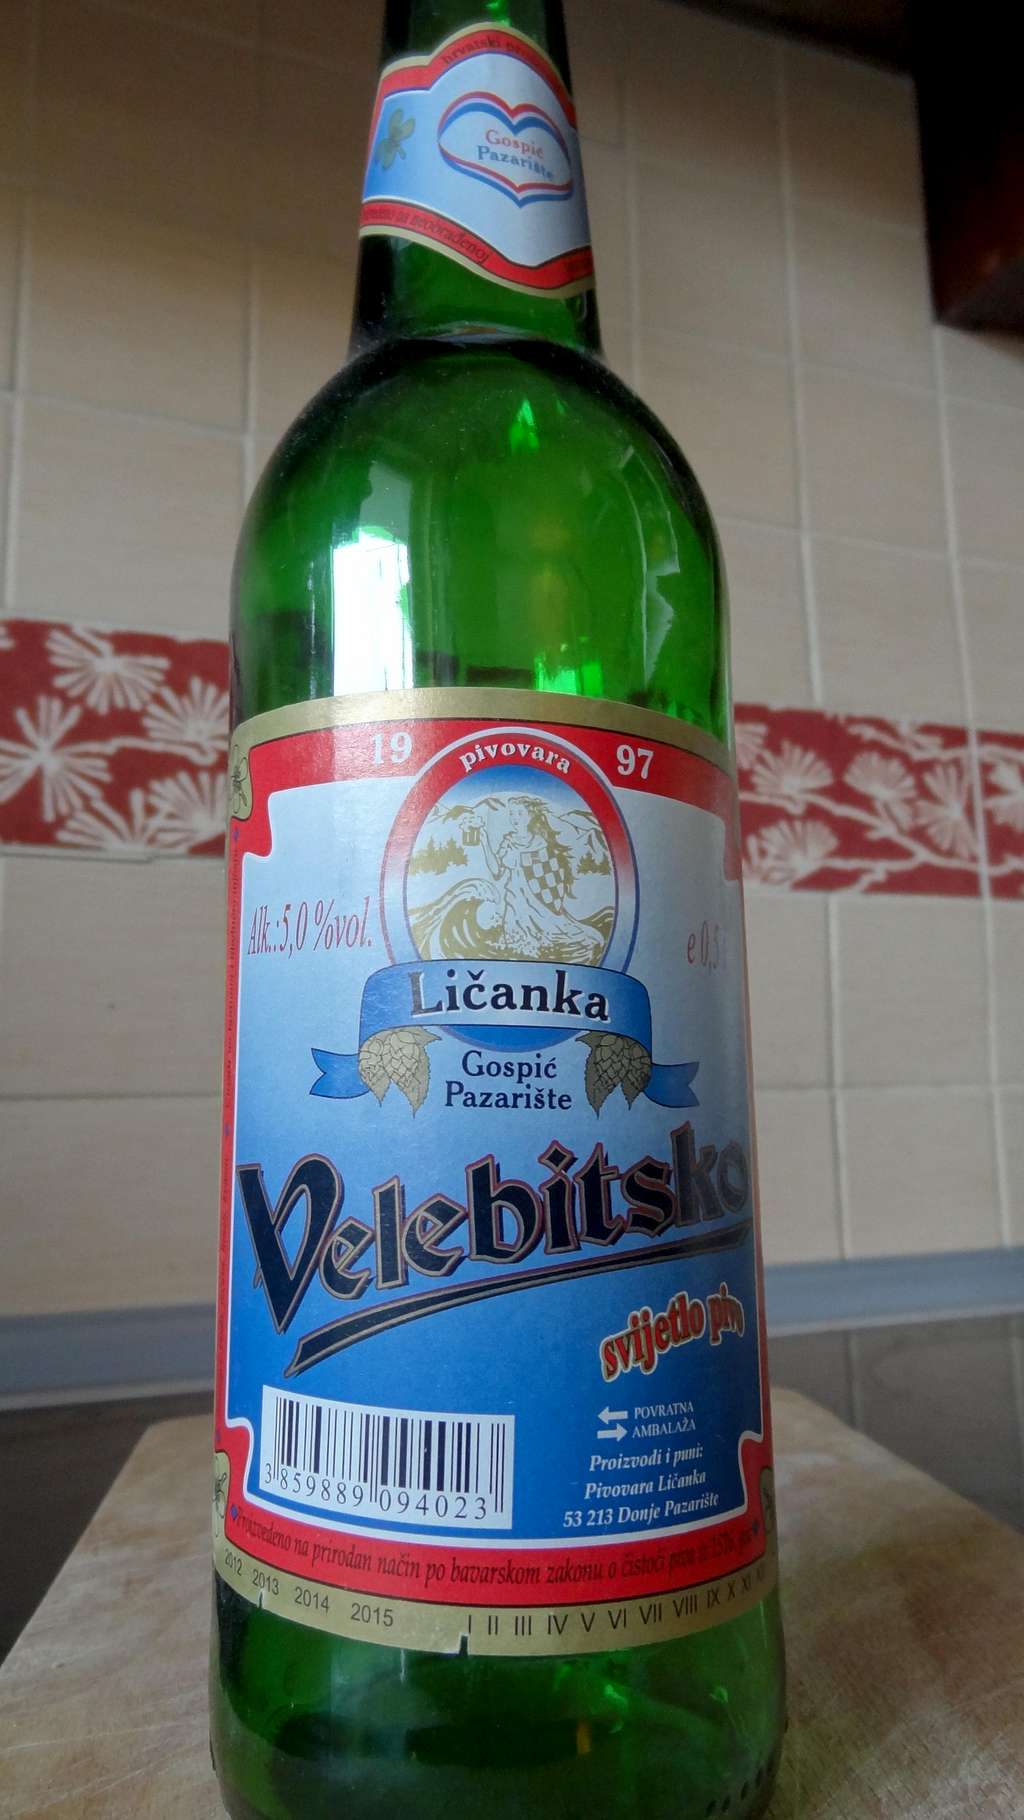 Velebitsko. The beer of the Velebit mountains. Locally brewed.